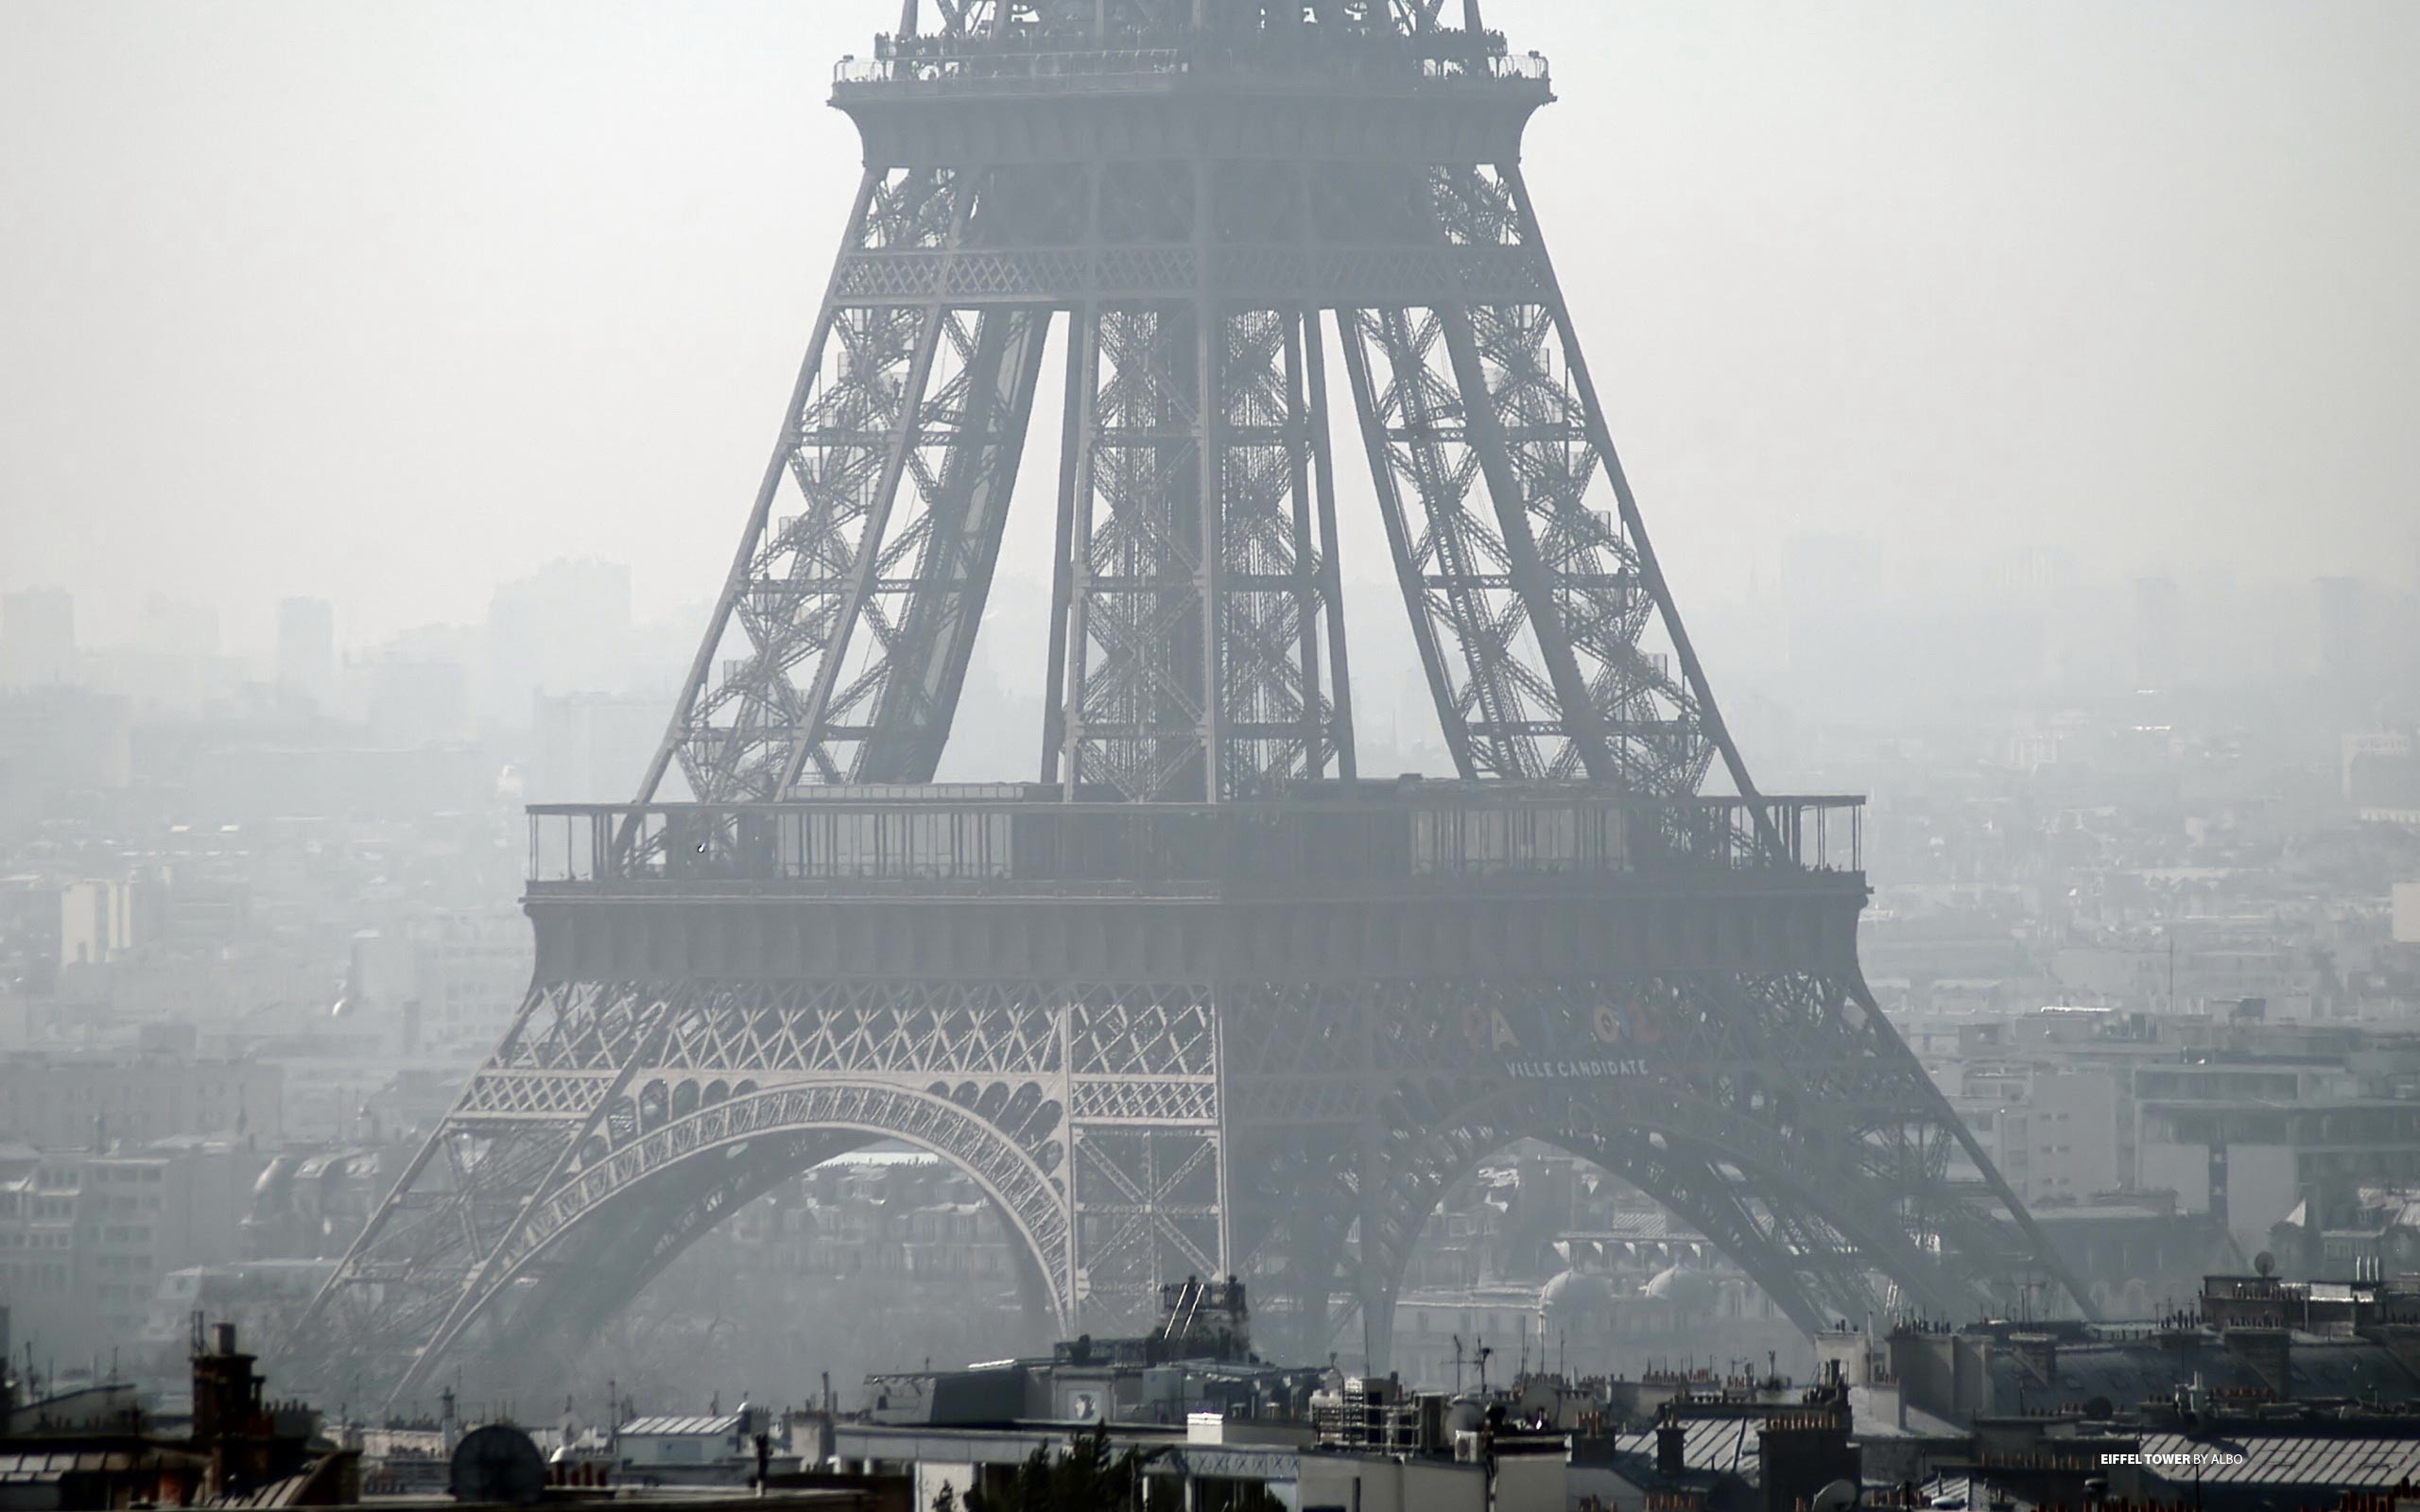 General 2560x1600 mist Eiffel Tower Paris France architecture cityscape landmark Europe